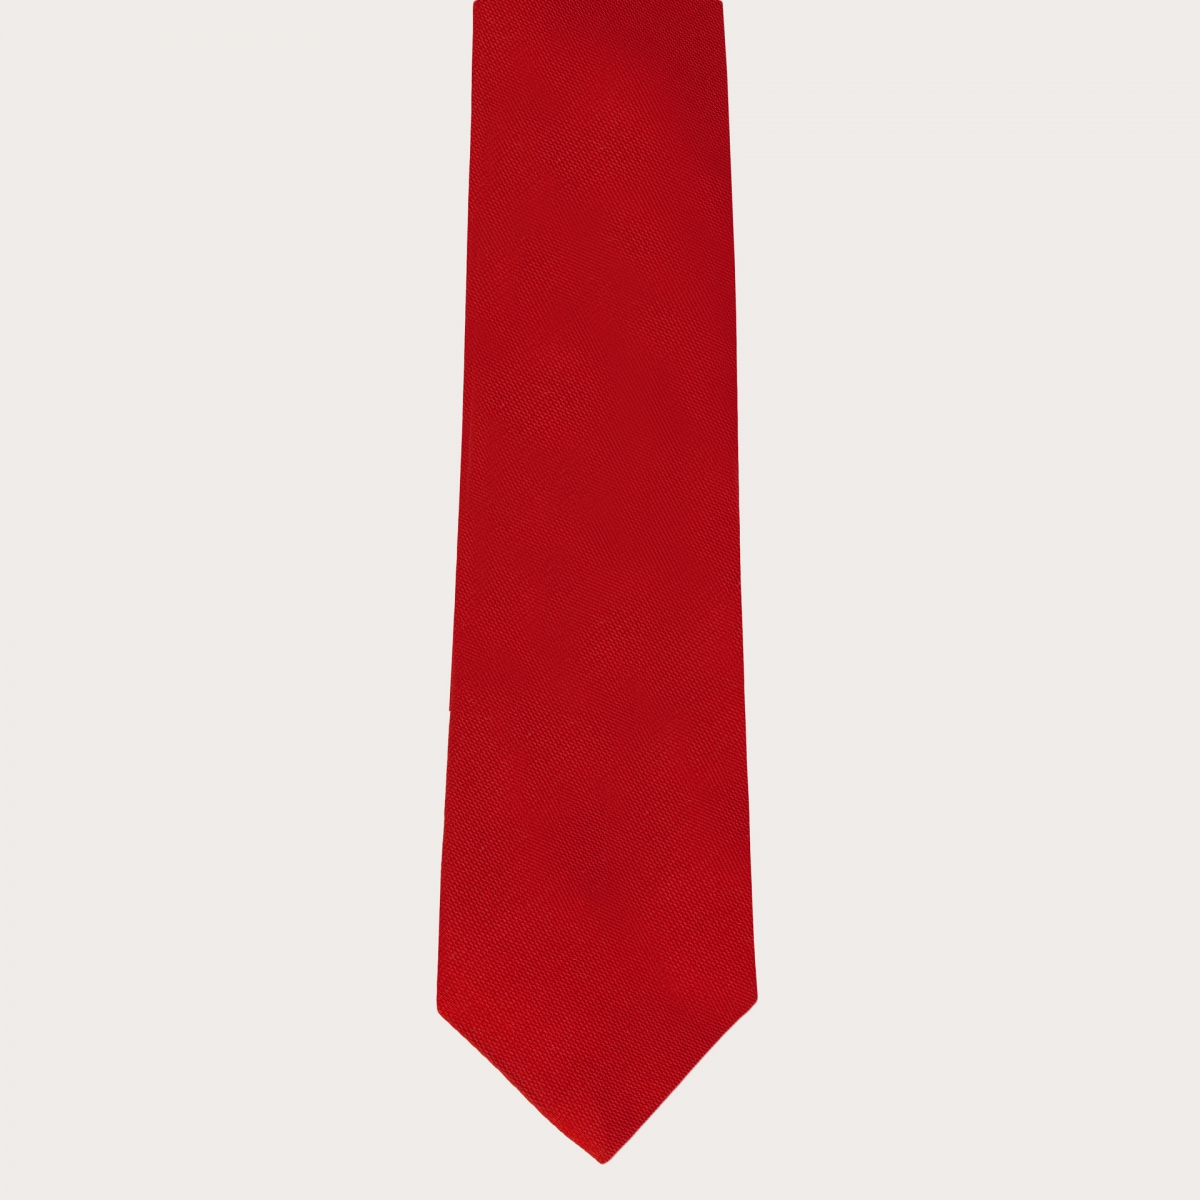 Brucle cravatta rossa in seta jacquard